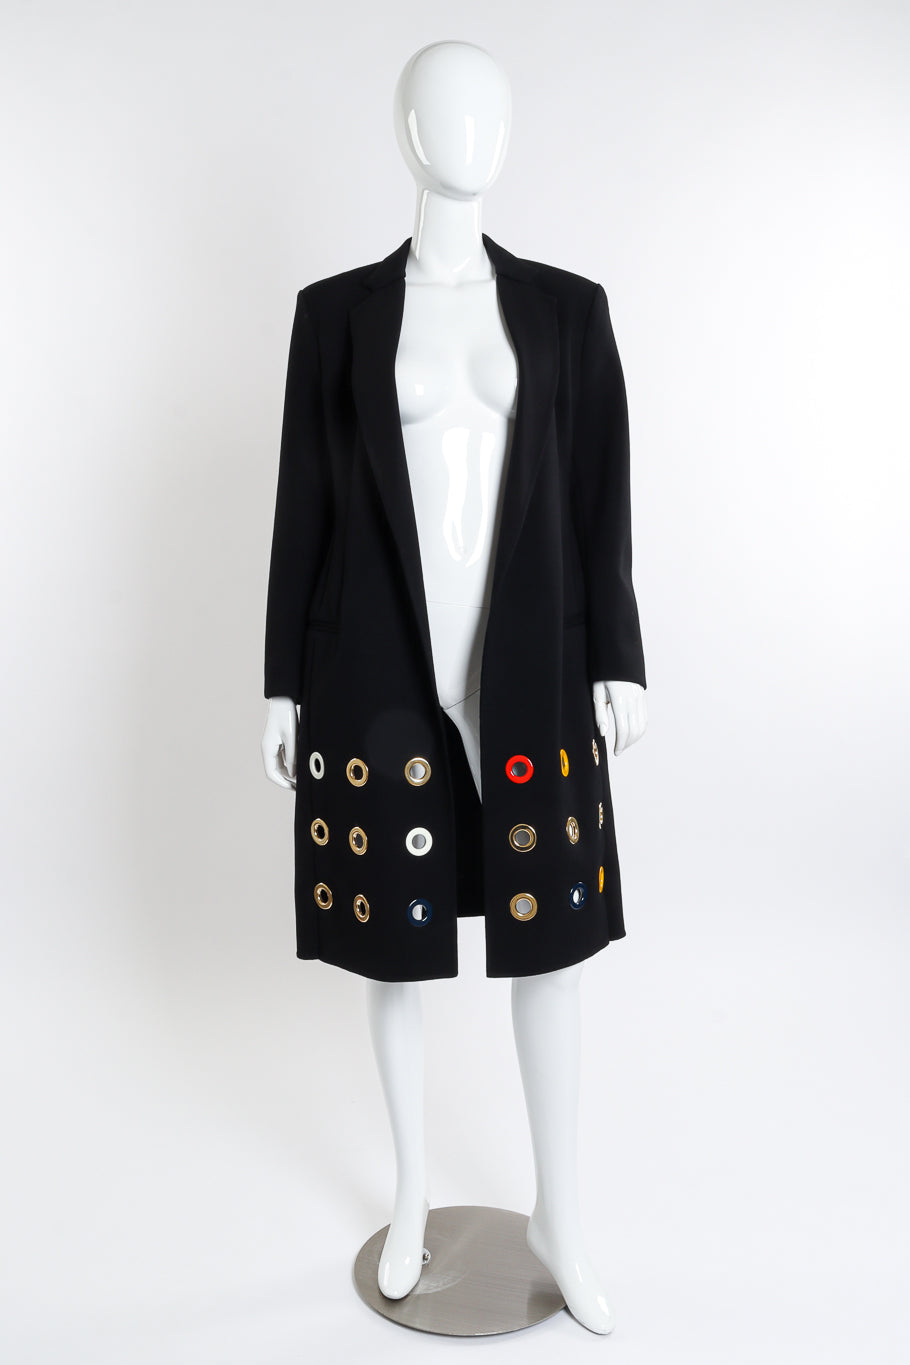 2014 S/S Eyelet Coat by Céline on mannequin @recessla